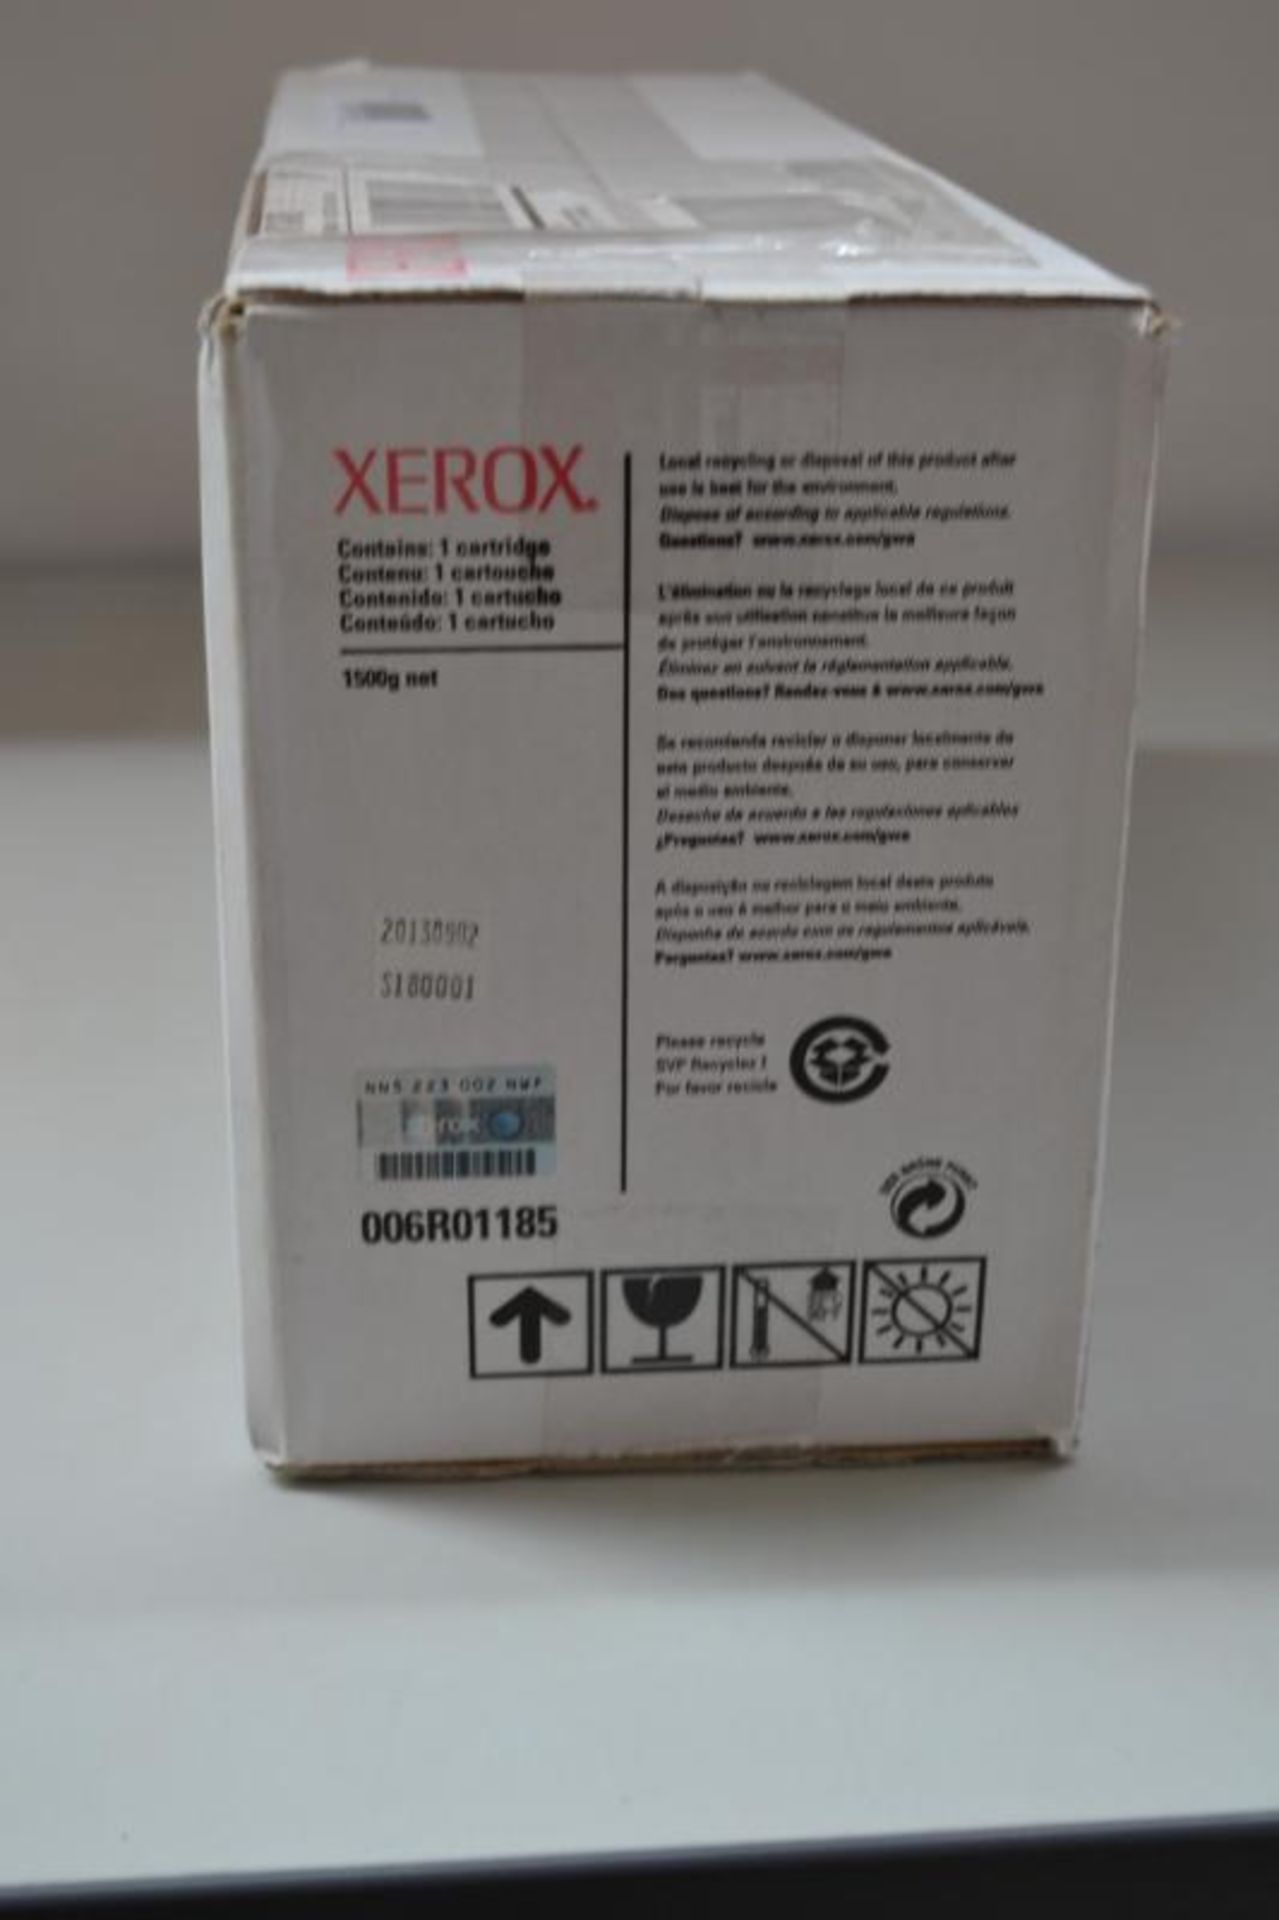 1 x Xerox 006R01185 Black Printer Toner Cartridge for 6030/6050 - New In Box - Ref J2199 - CL394 - L - Image 3 of 3